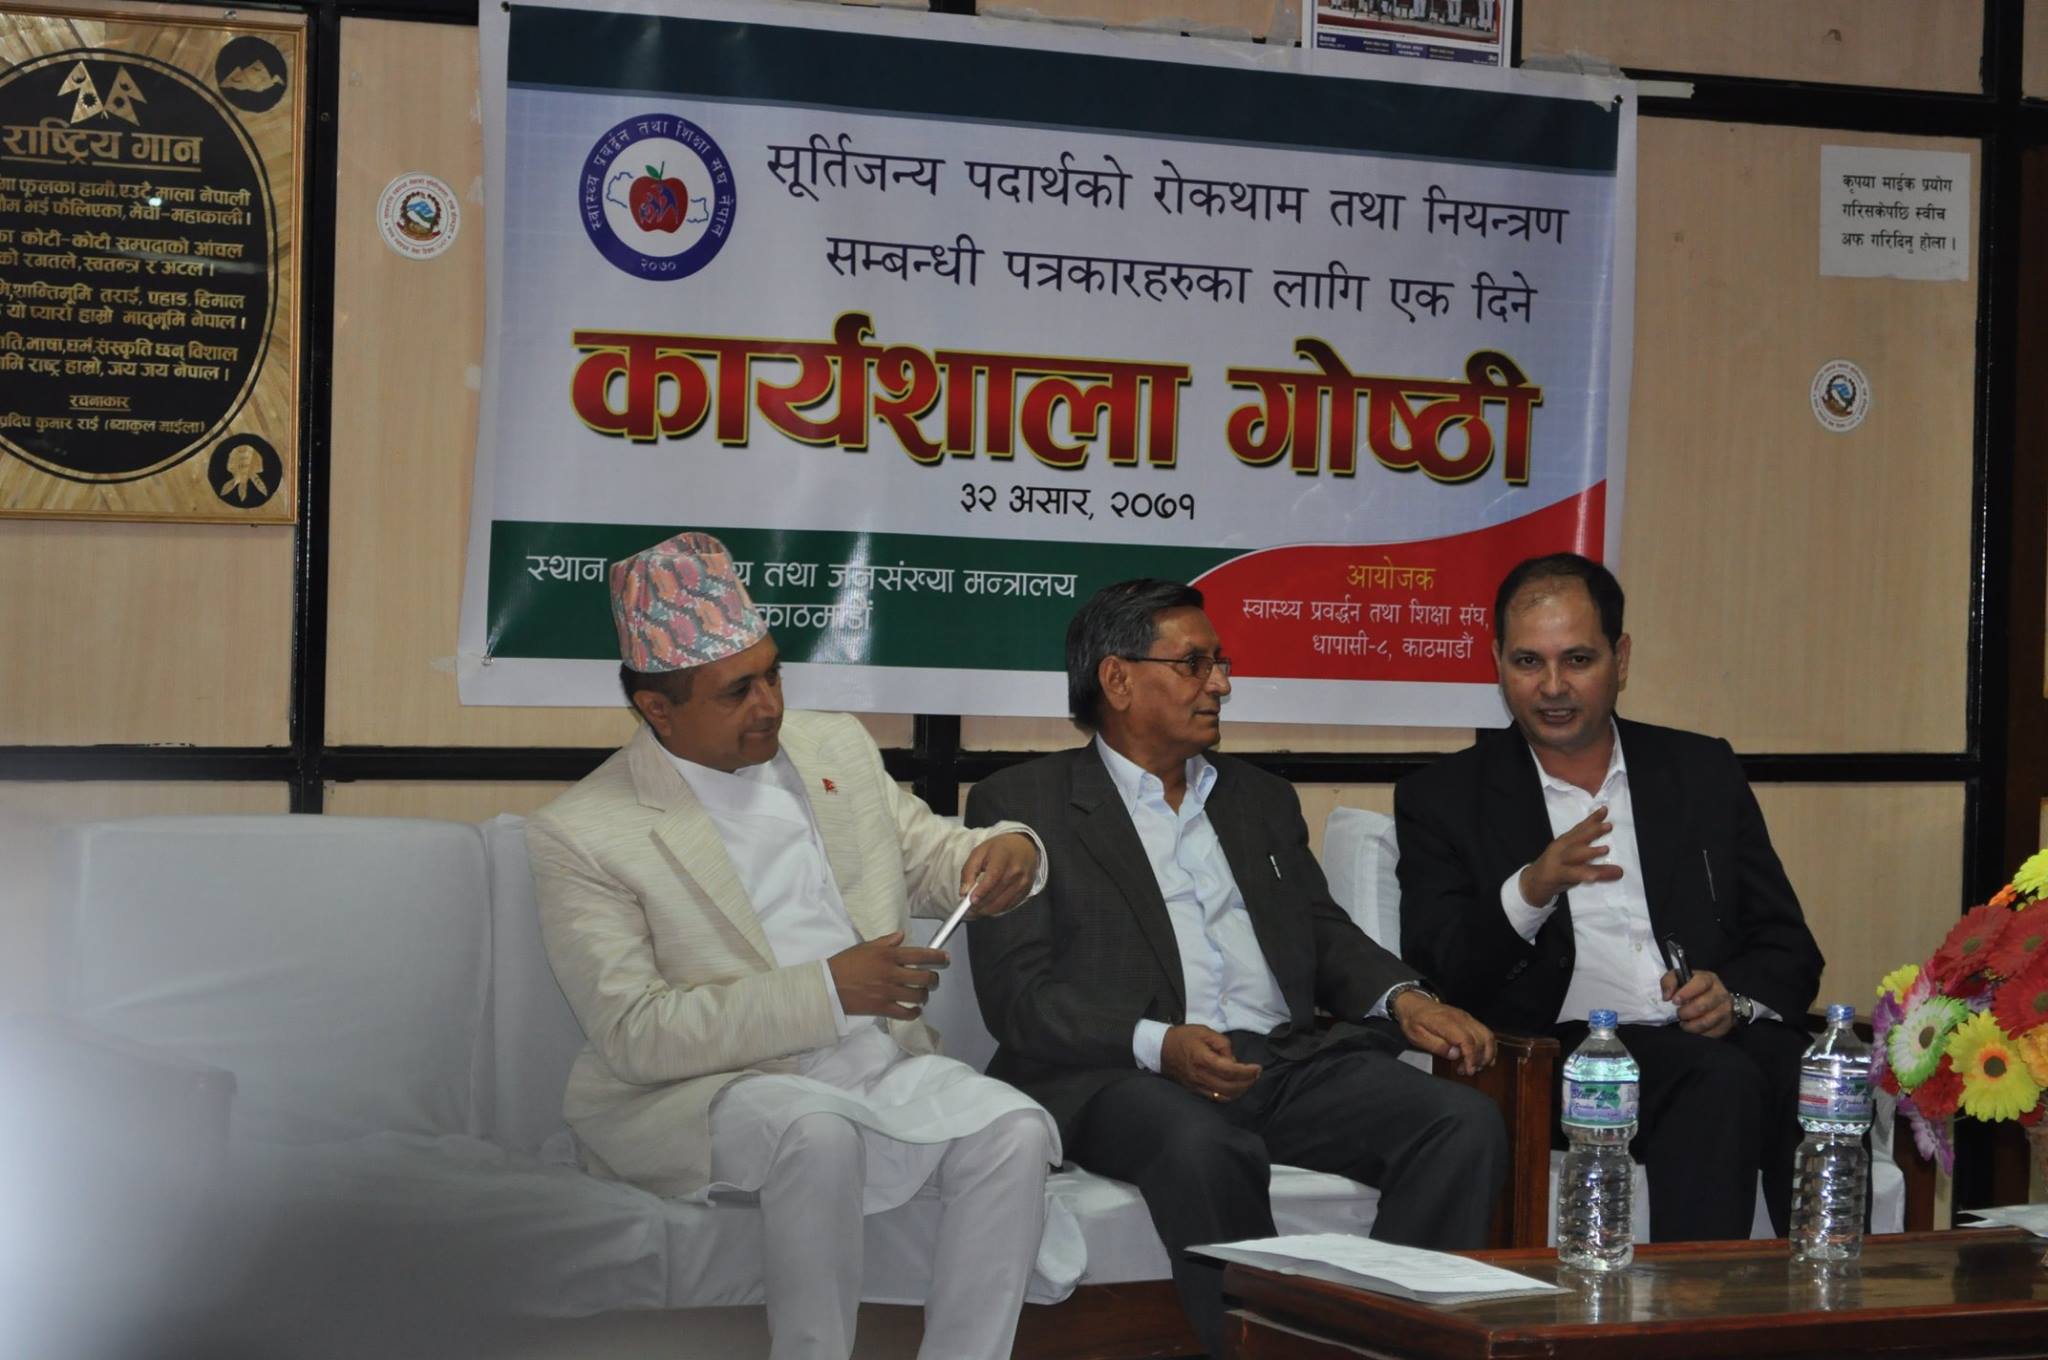 Press meet on anti-tobacco initiatives in Nepal. Hon Minister for Health and Population Khagaraj Adhikari also addressed the press.